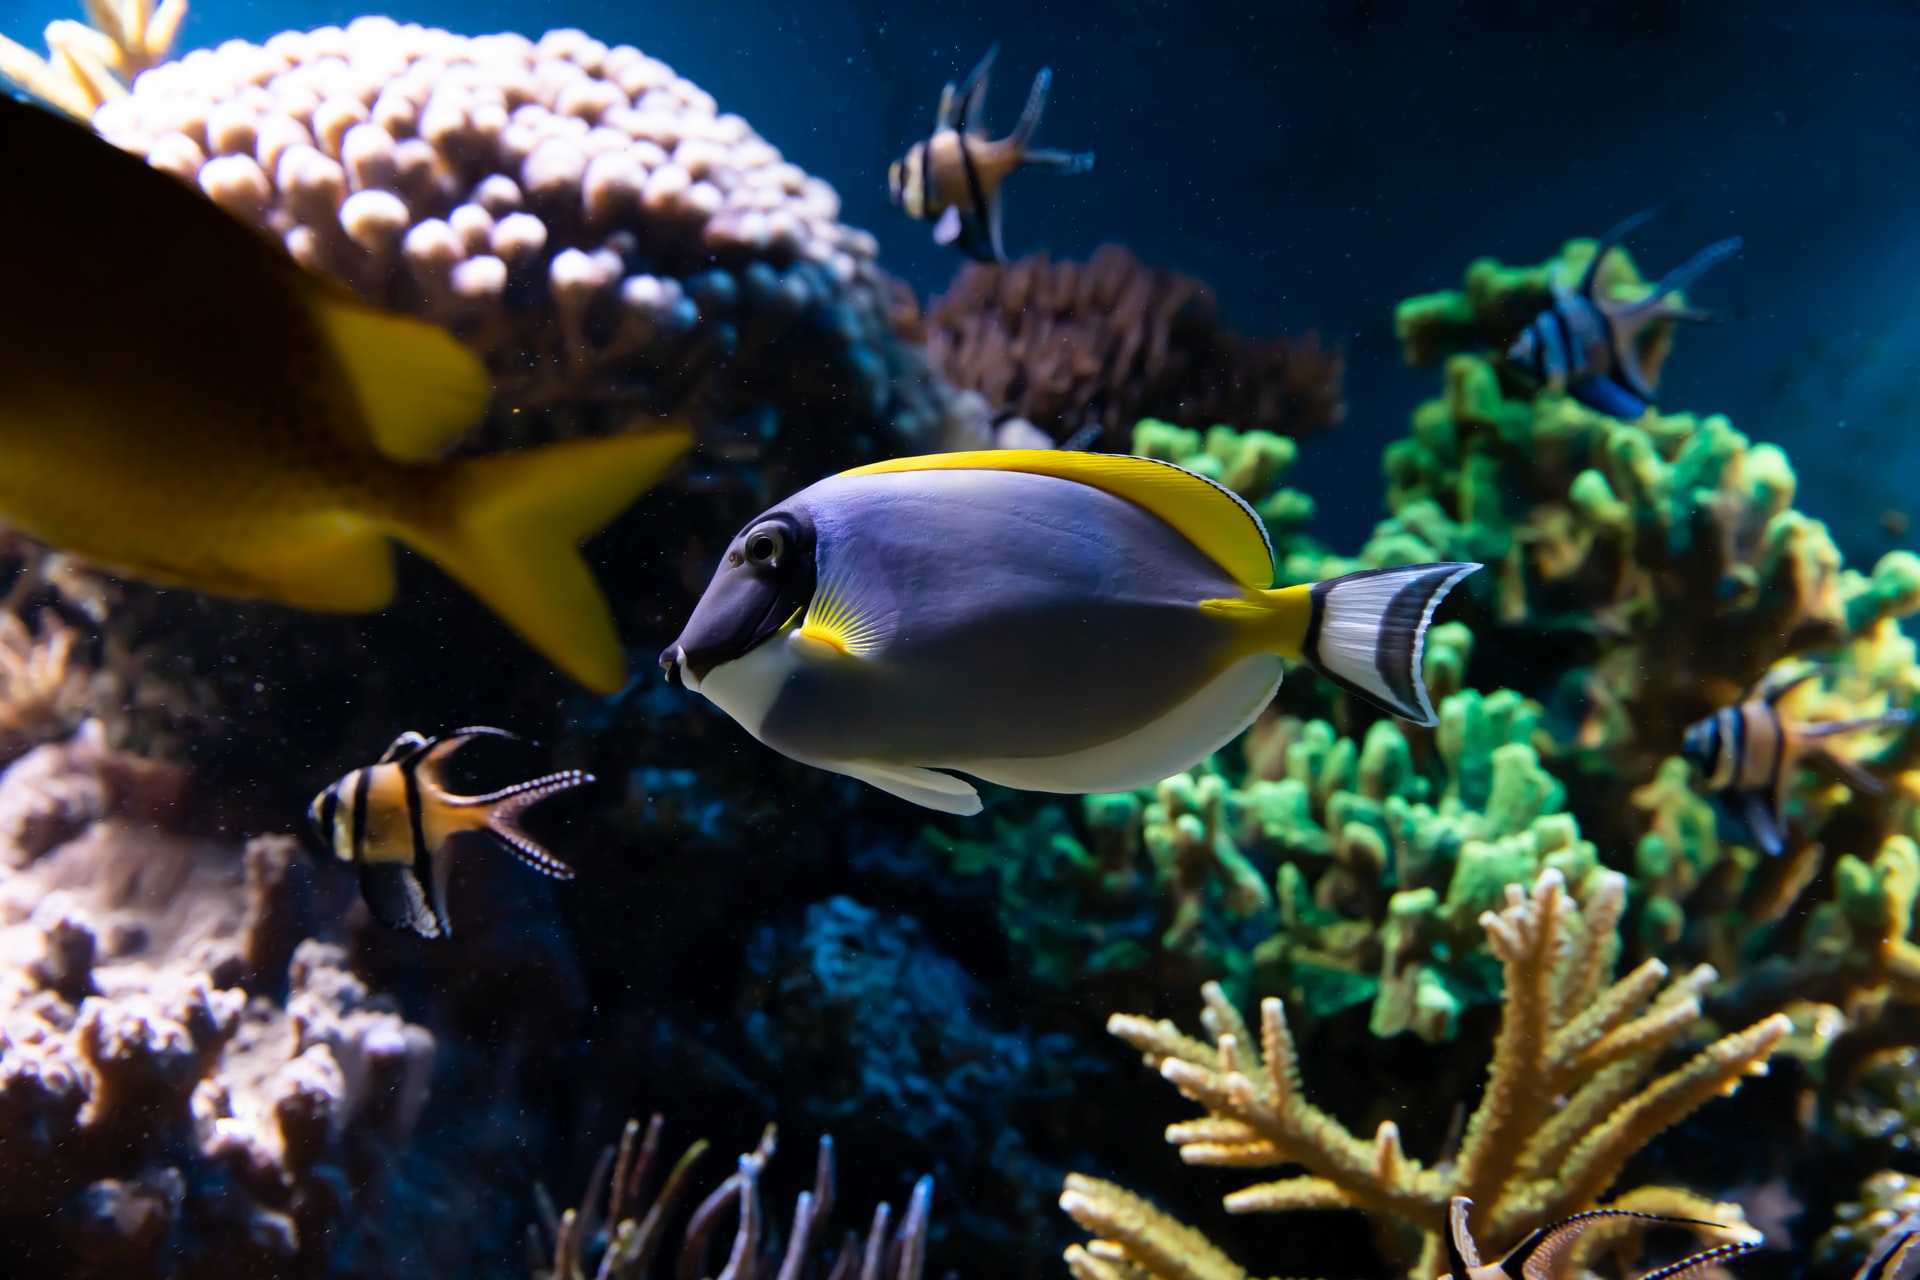 Explore an underwater world at the Sea Life London Aquarium